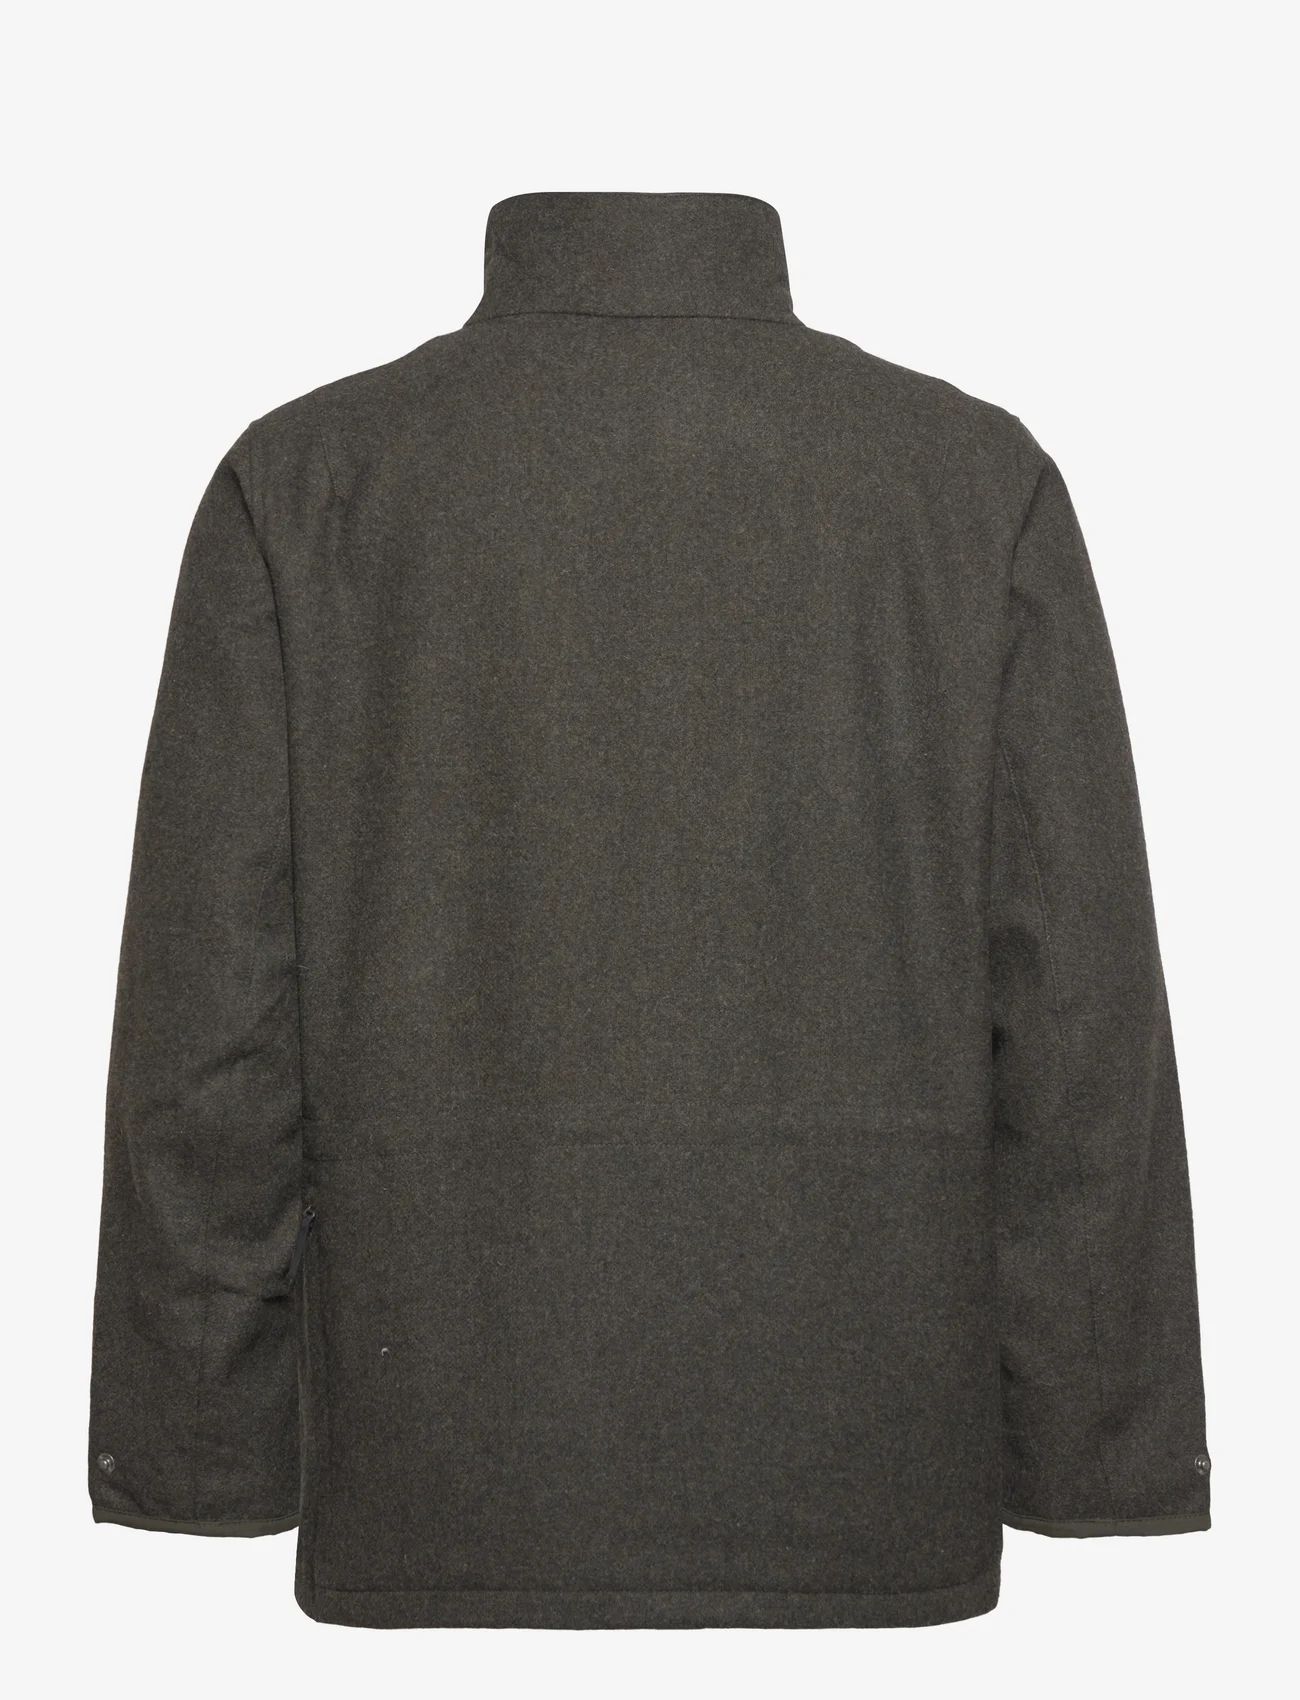 Chevalier - Loden Wool Jacket Men 2.0 - outdoor & rain jackets - dark green melange - 1